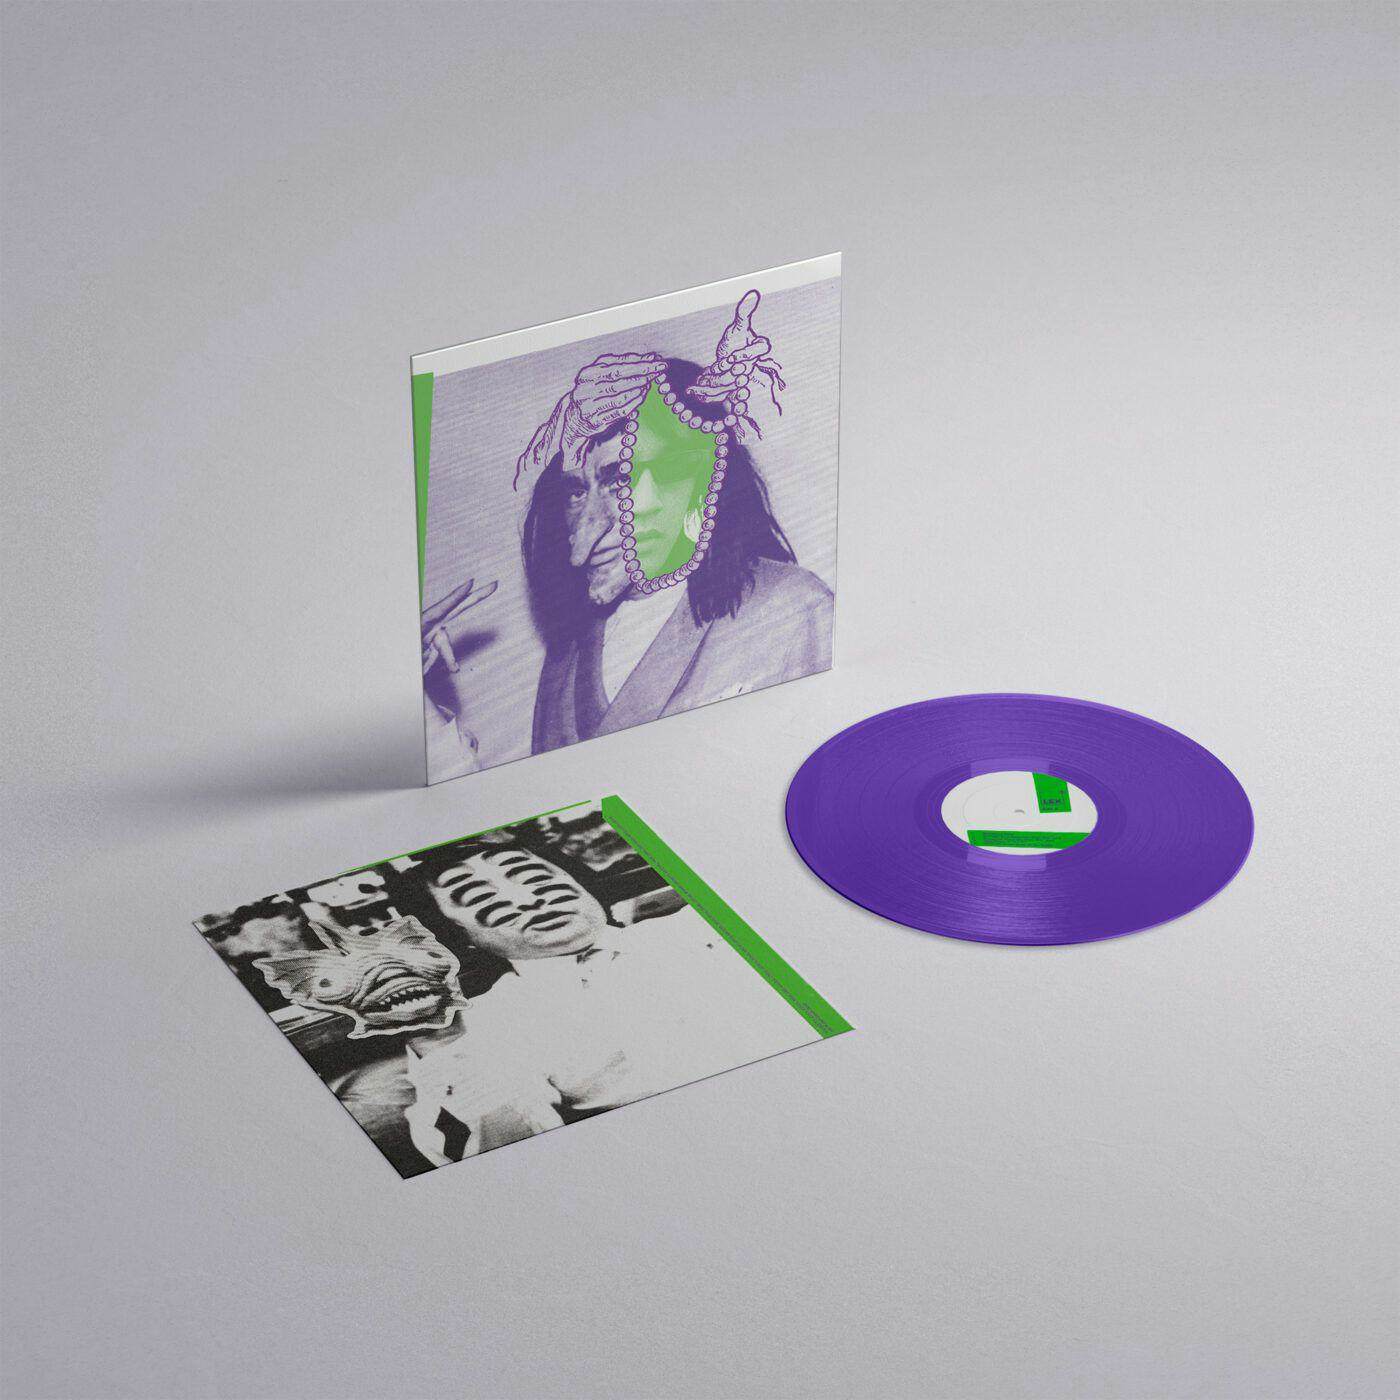 vinyl record unboxing: Steve Lacy - 2nd album Gemini Rights LP